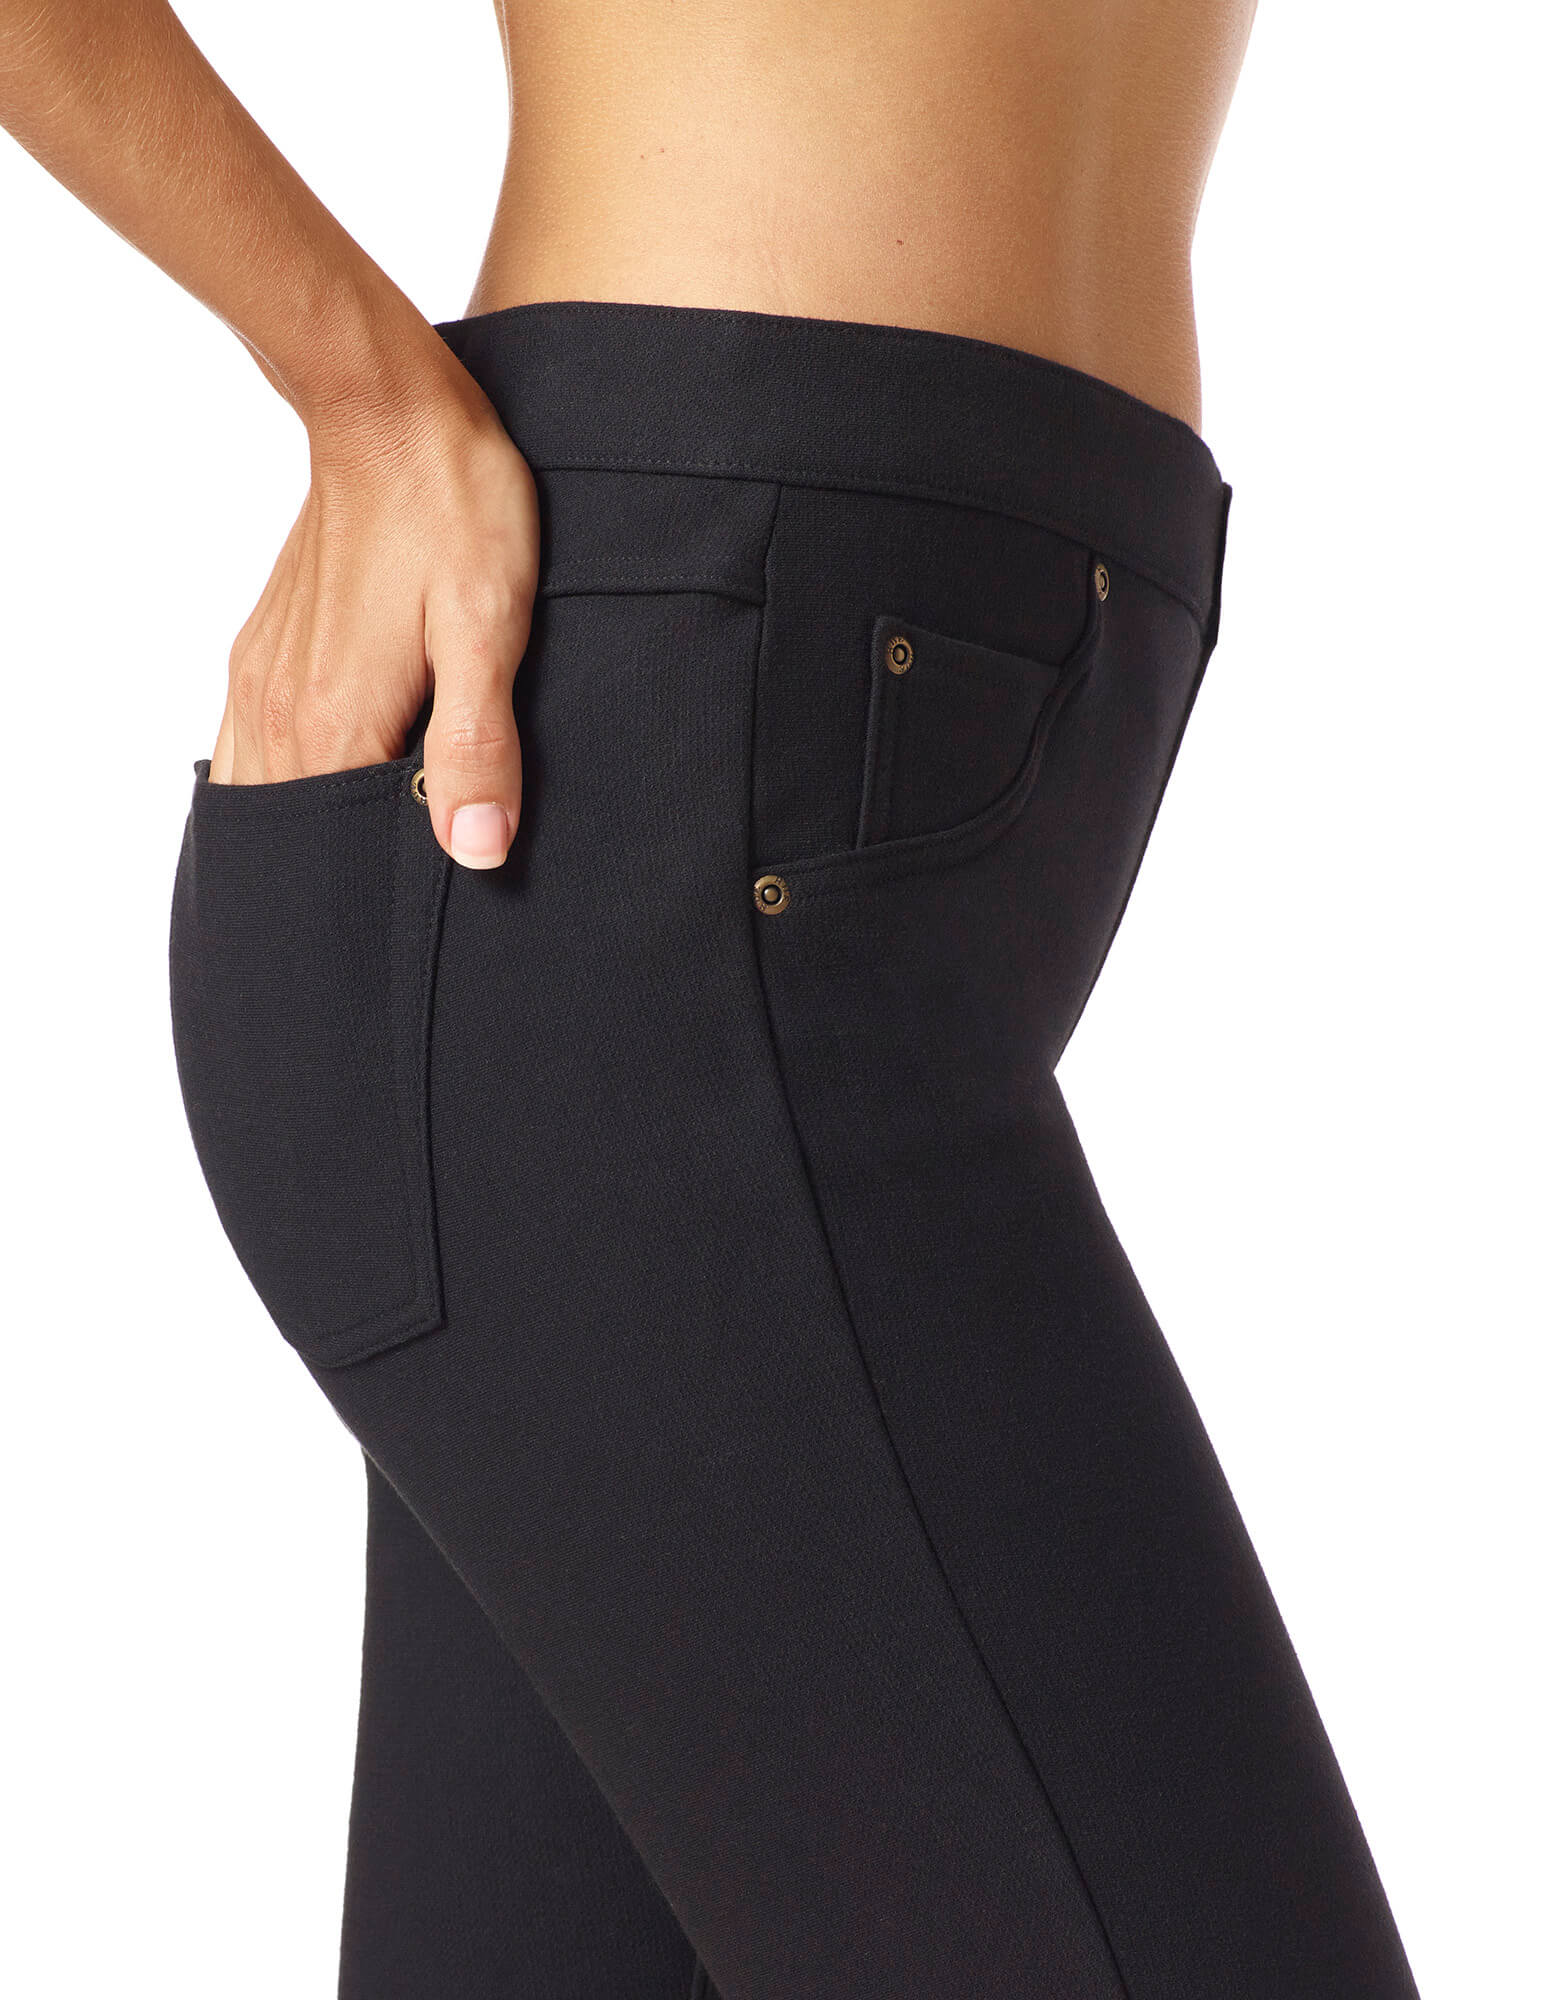 Soft Surroundings Jeans slimming support Metro Legging Black Denim size XS  (2-4)